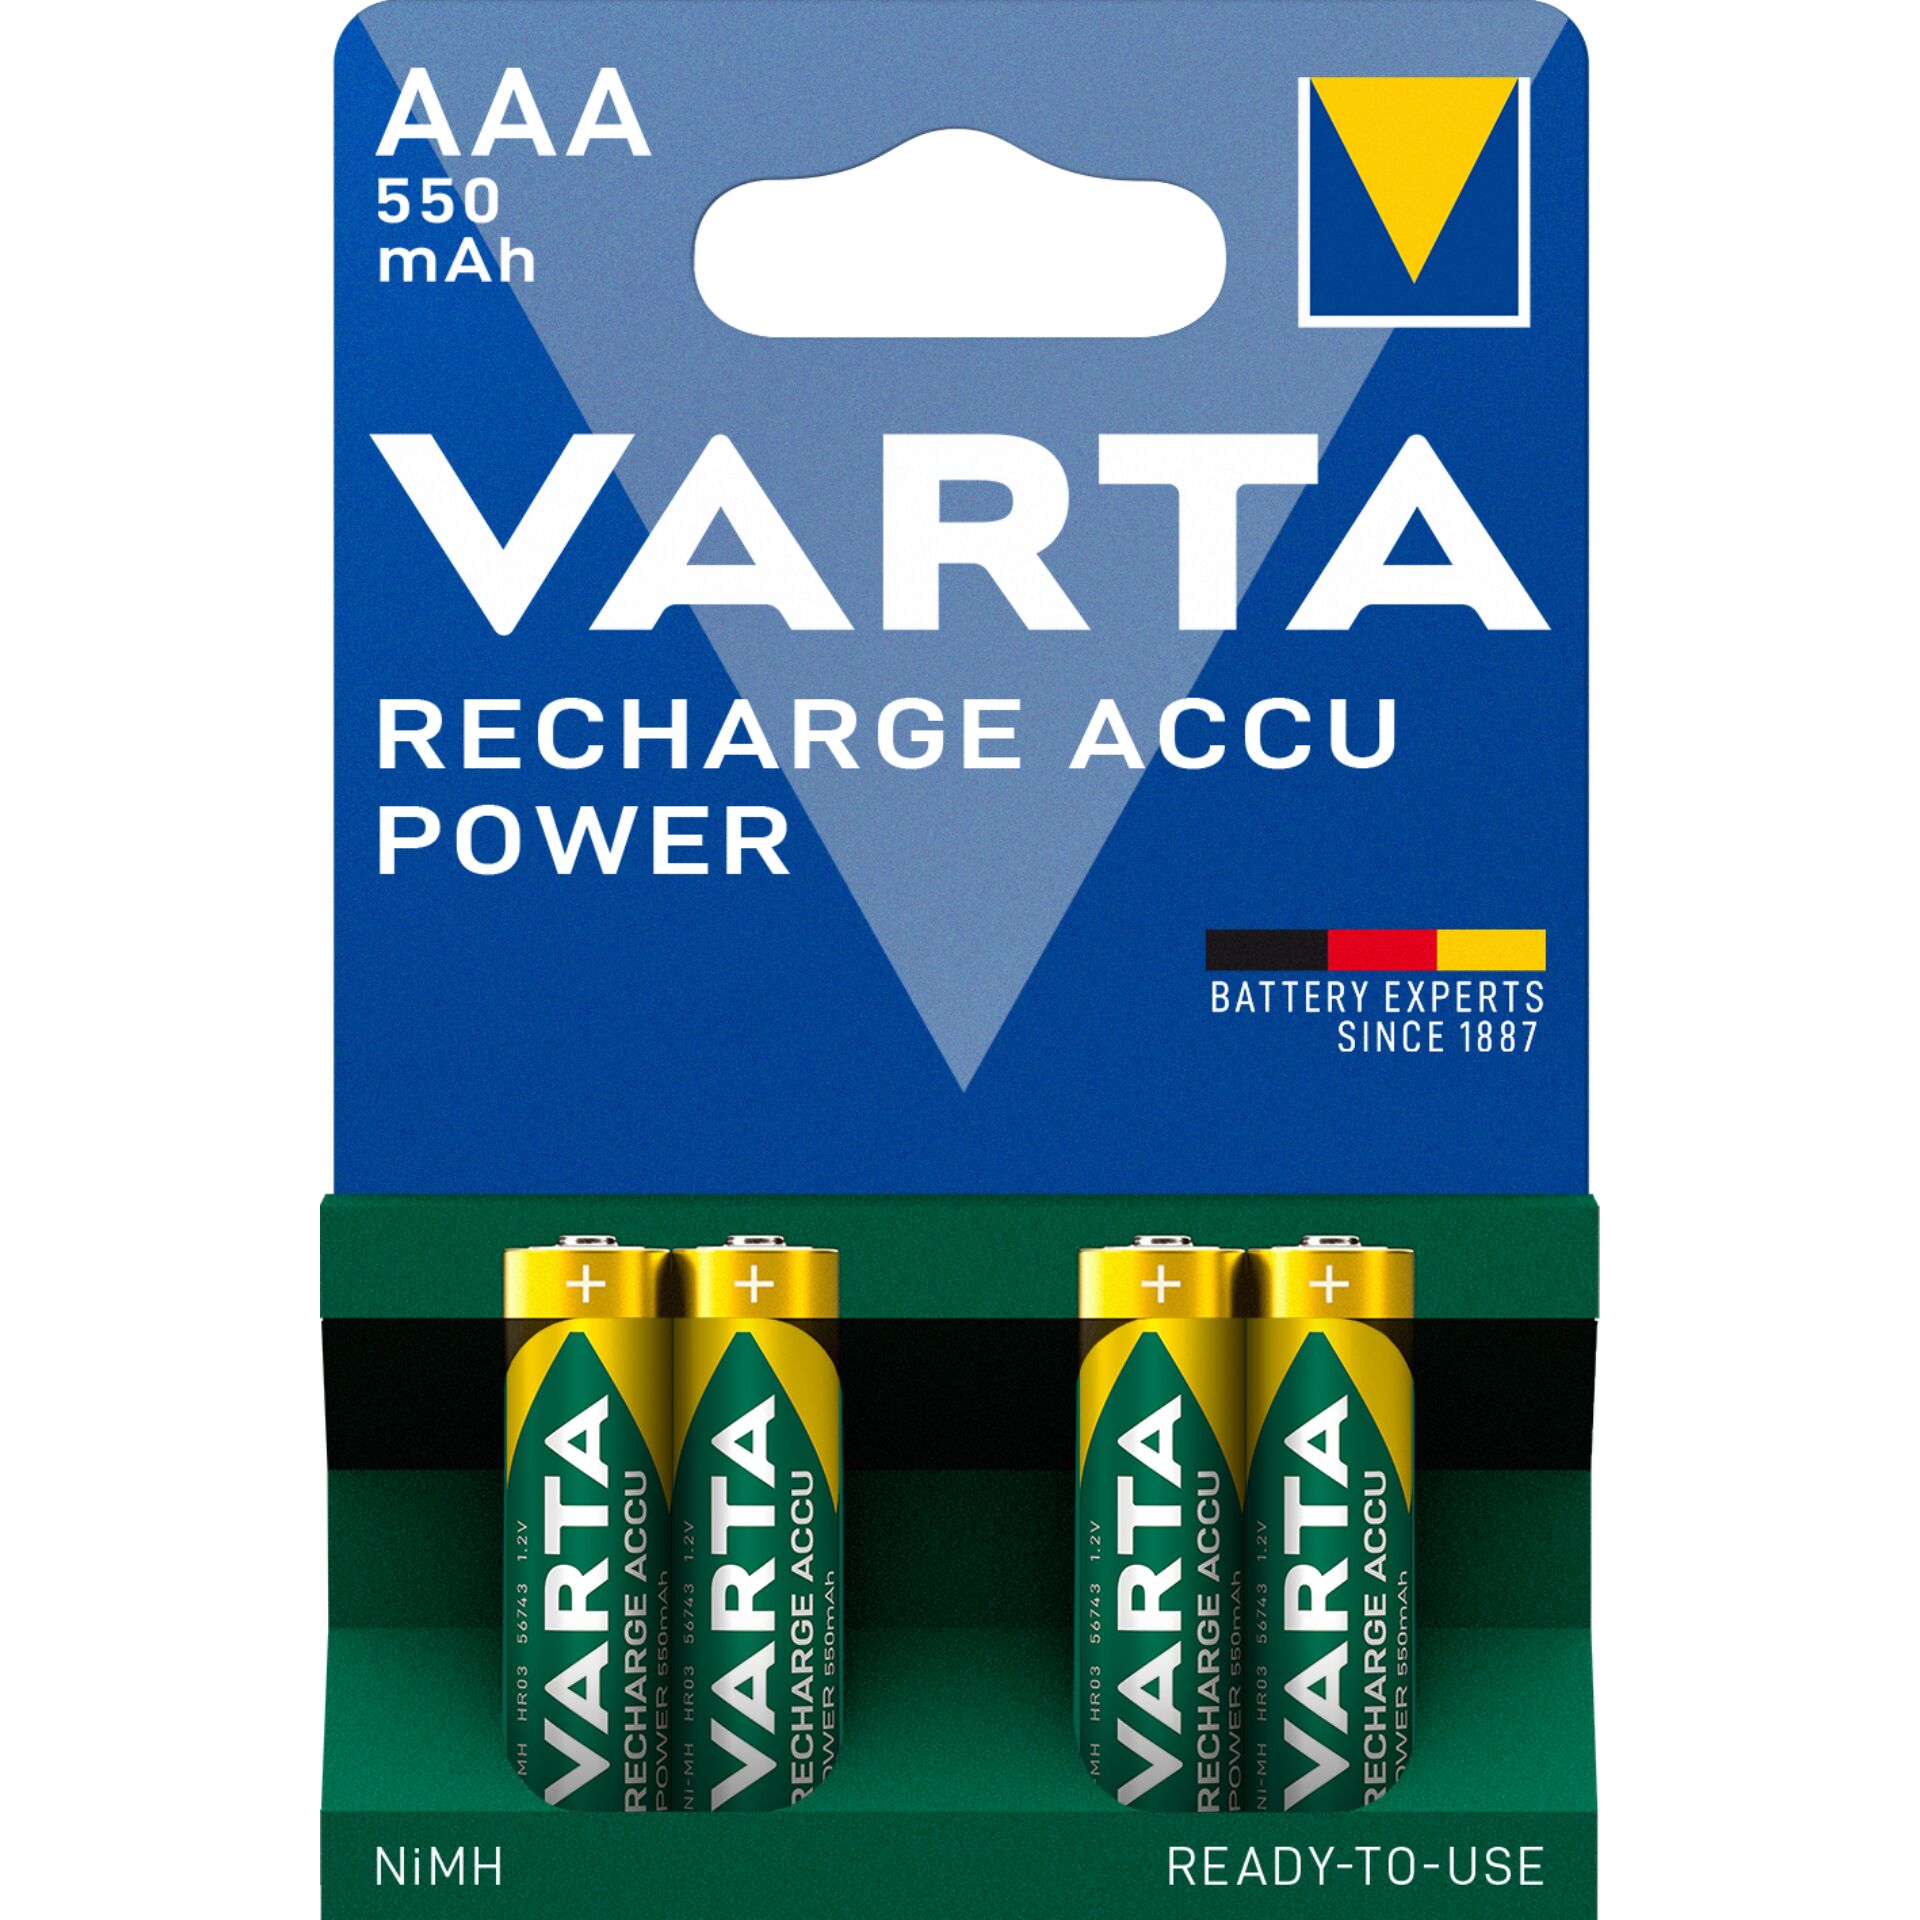 1x4 Varta RECHARGE ACCU Power 550 mAH AAA Micro NiMH